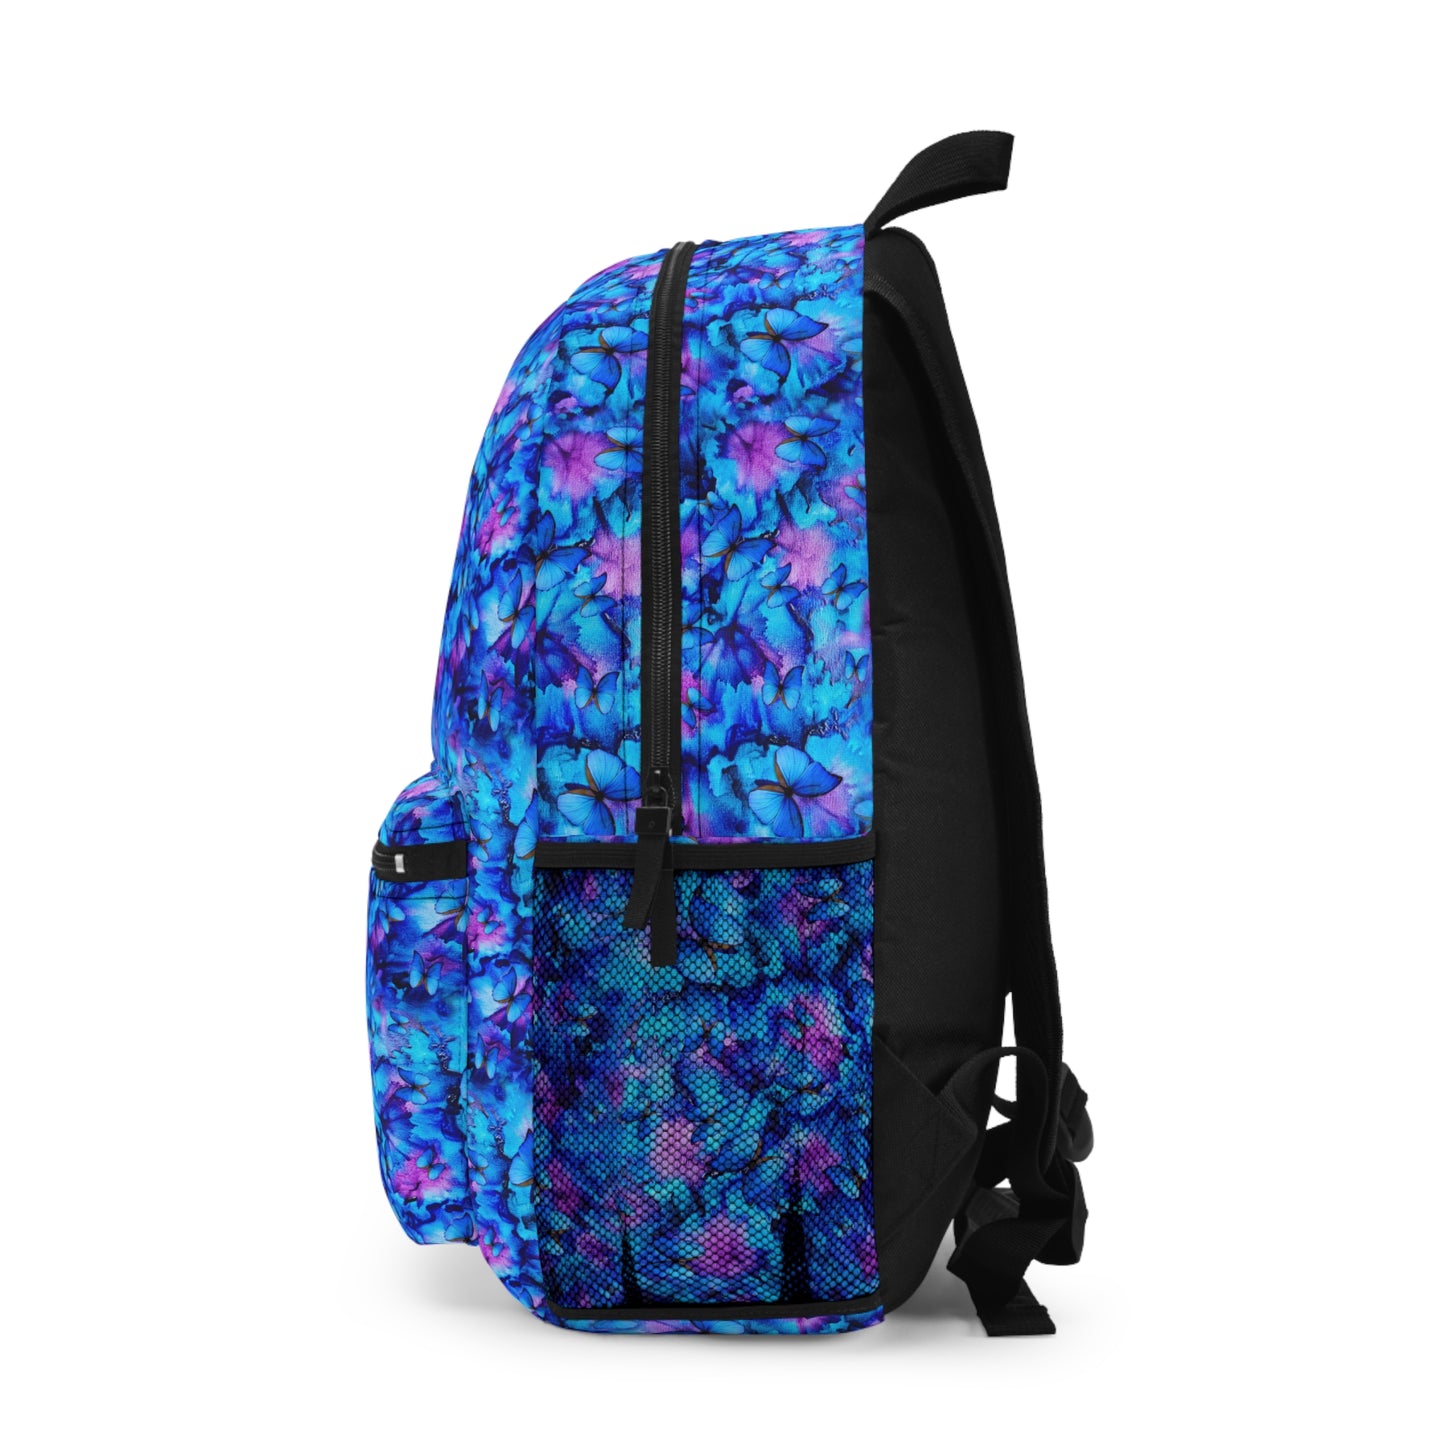 Backpack - Dancing with Butterflies